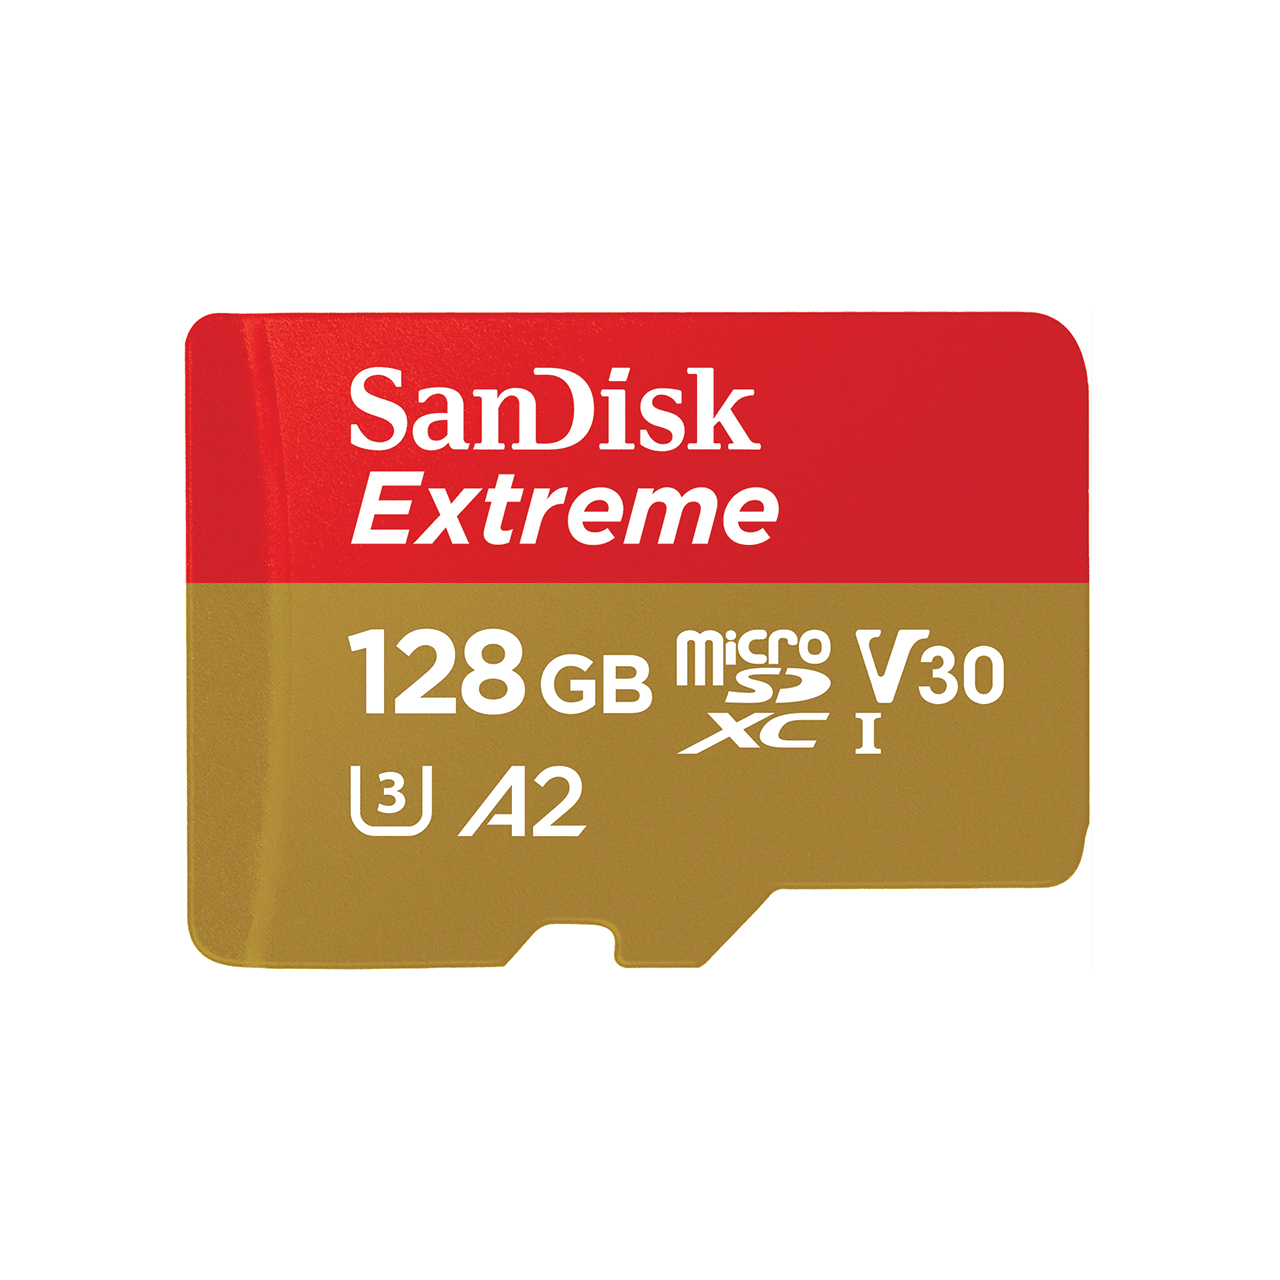 SanDisk Extreme 128 GB MicroSD